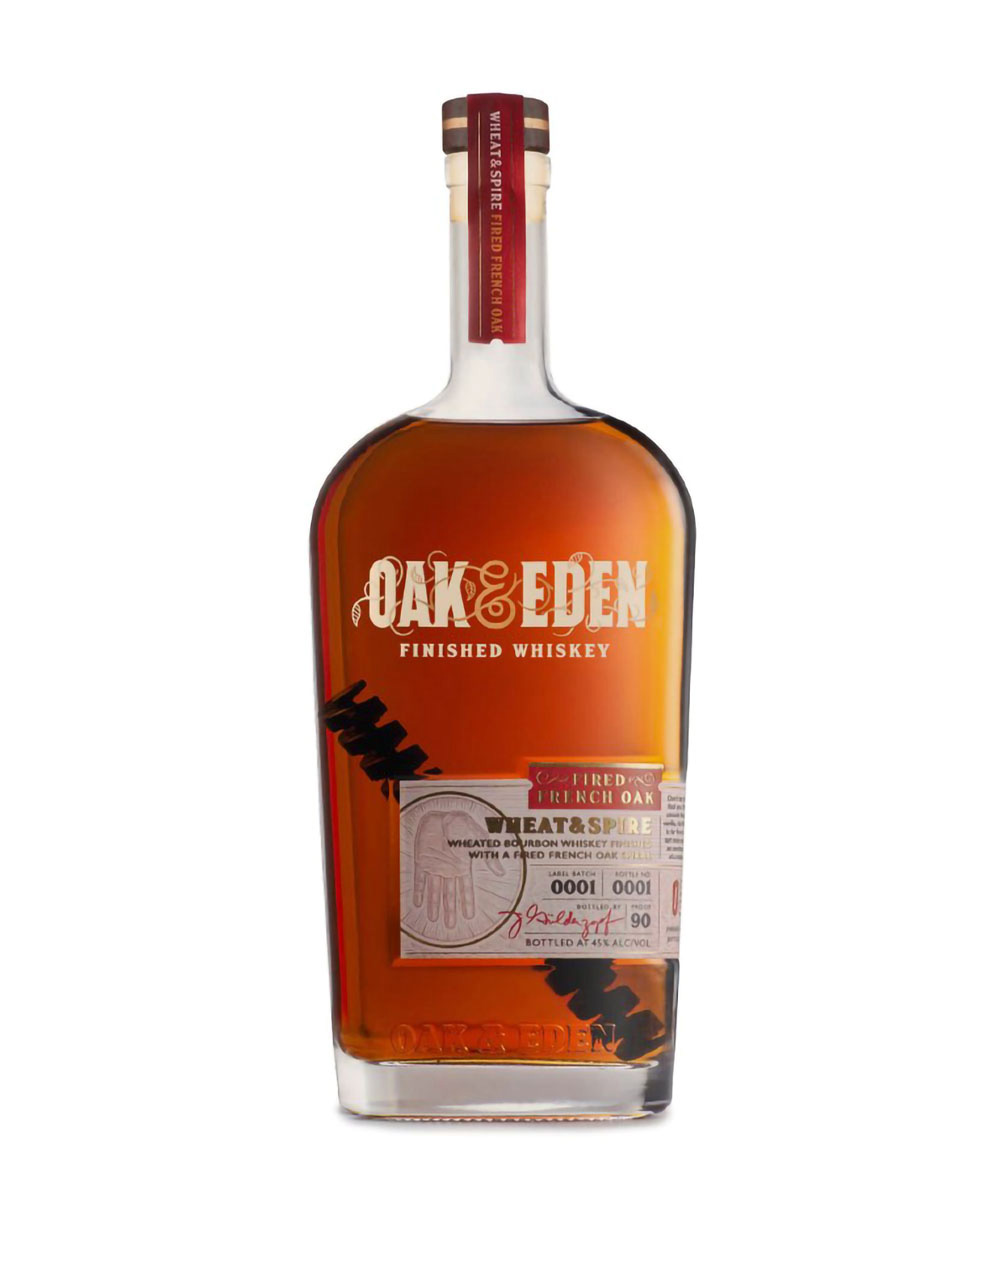 Oak & Eden Wheat & Spire Bourbon Whiskey